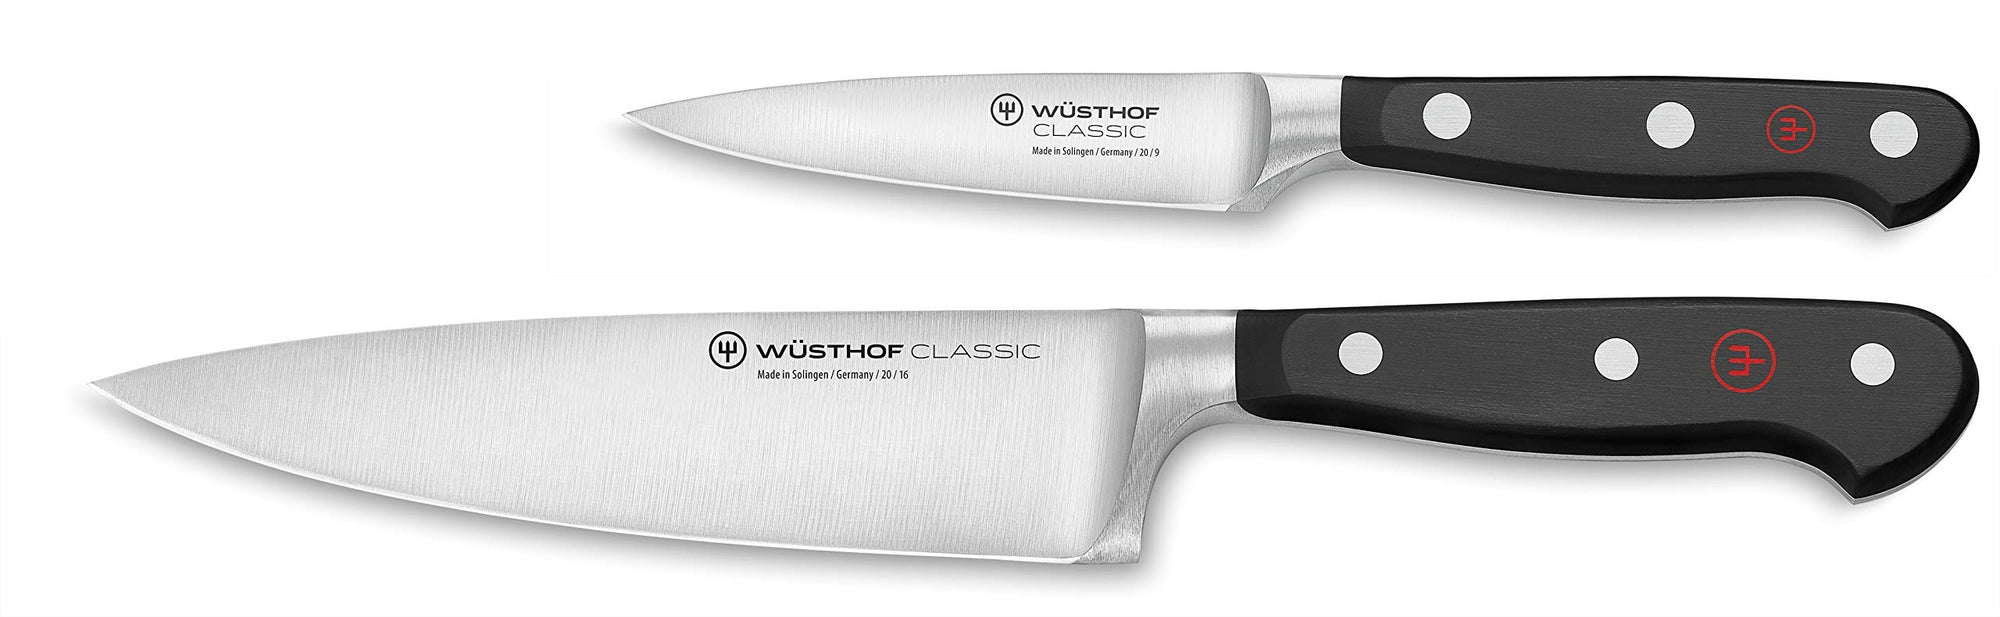 Wusthof Classic 2-Piece Chef Knife Set